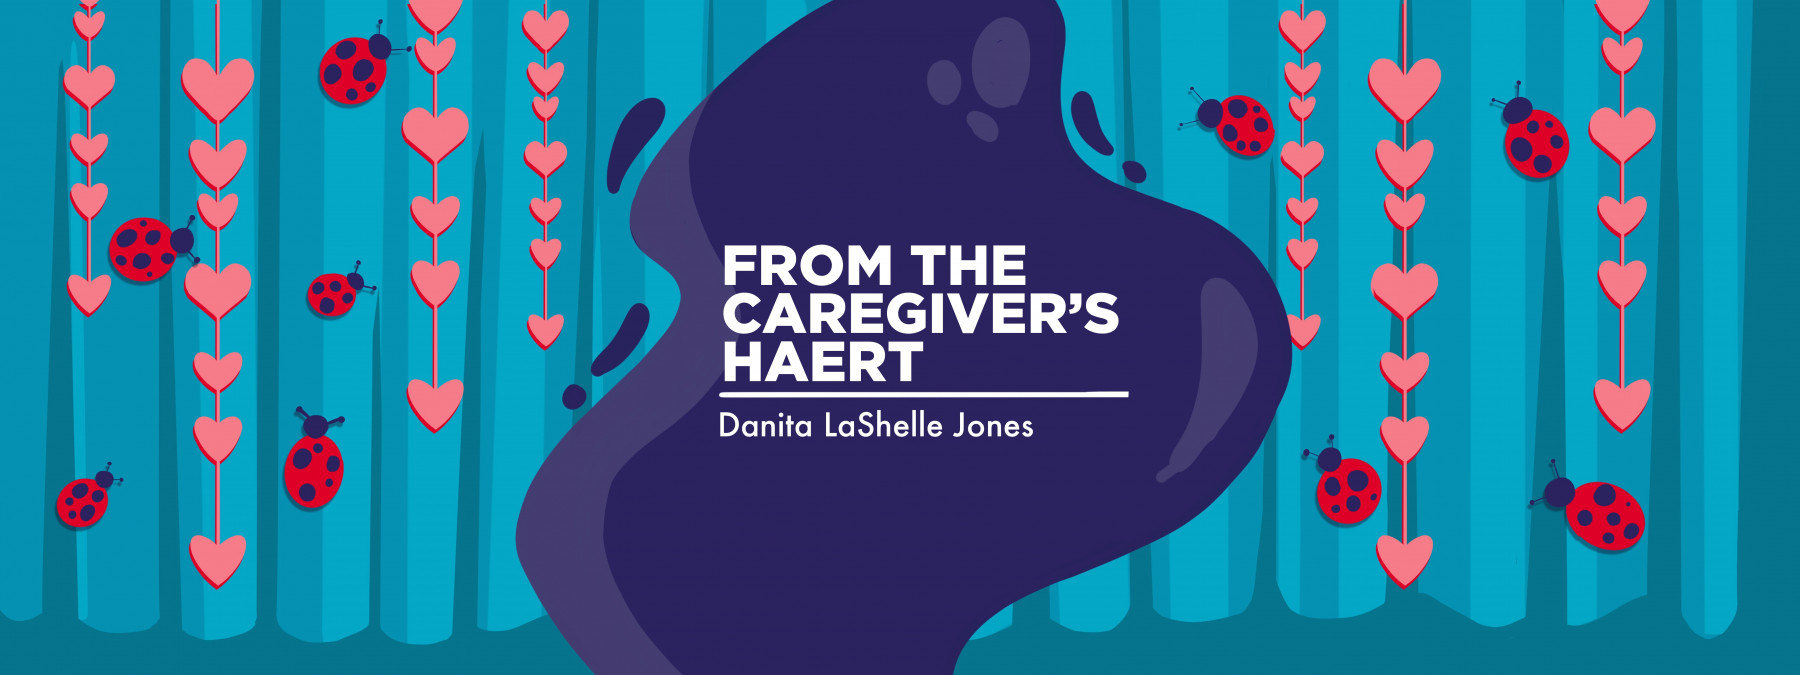 hereditary angioedema diagnosis | Angioedema News | living in denial | banner image for Danita LaShelle Jones' column, 